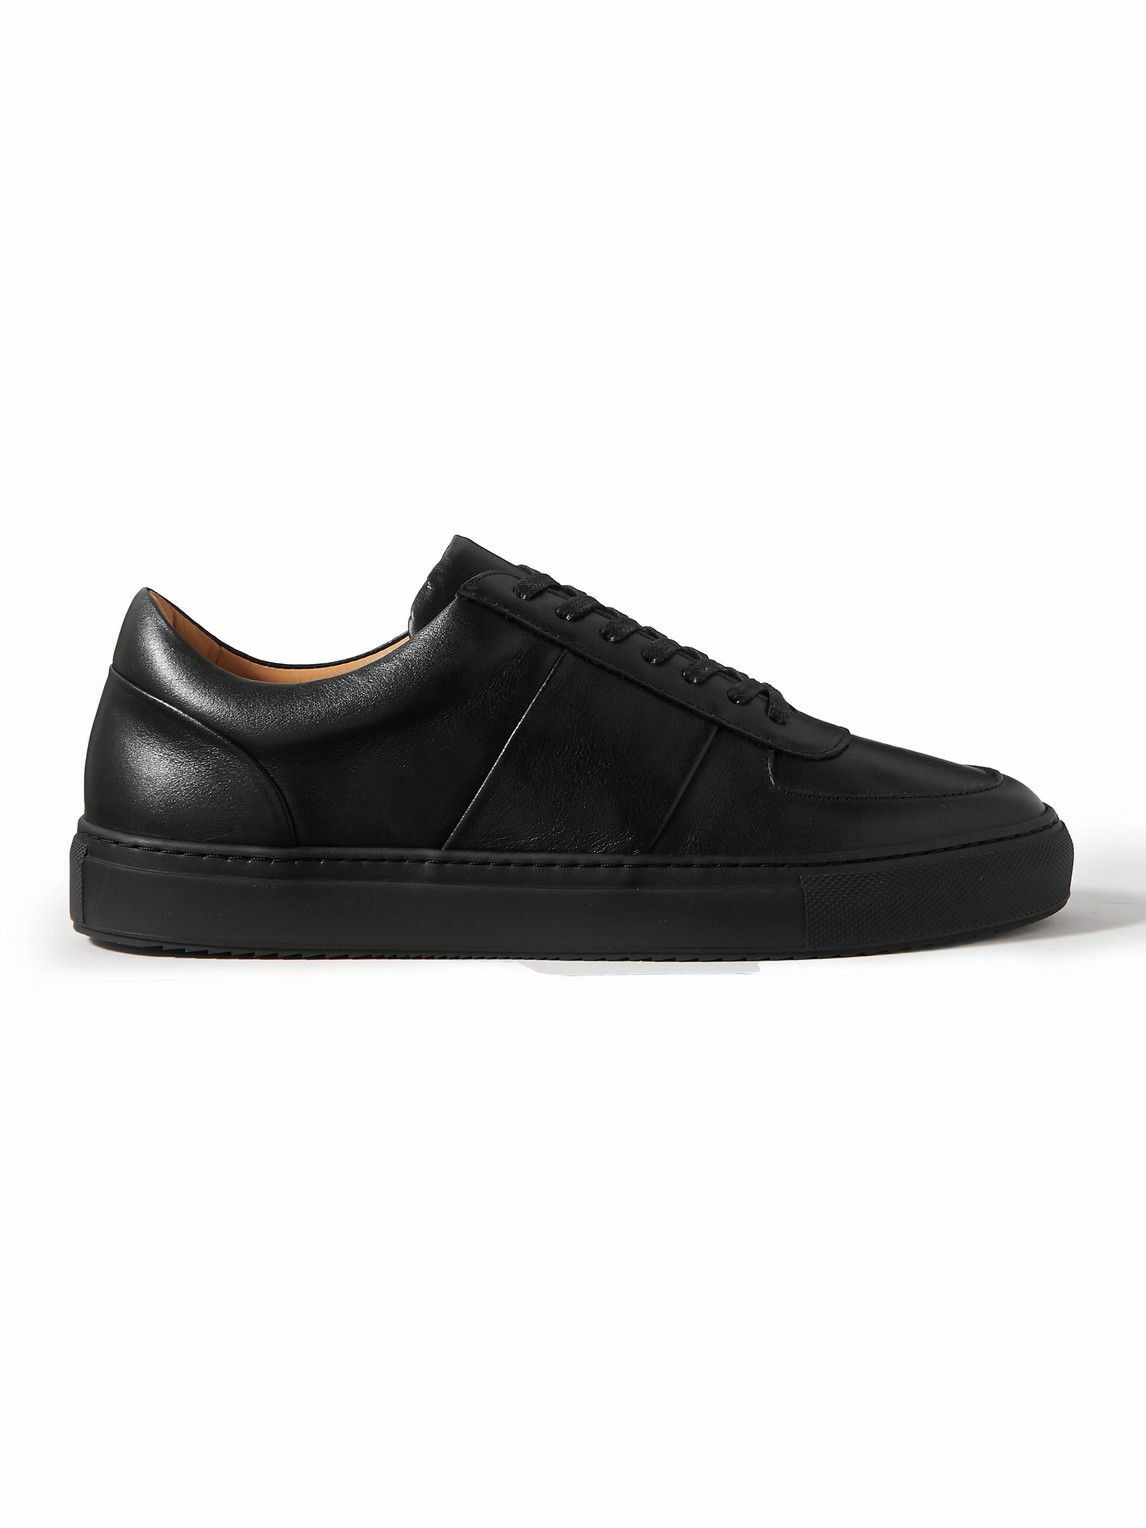 Mr P. - Leather Sneakers - Black Mr P.